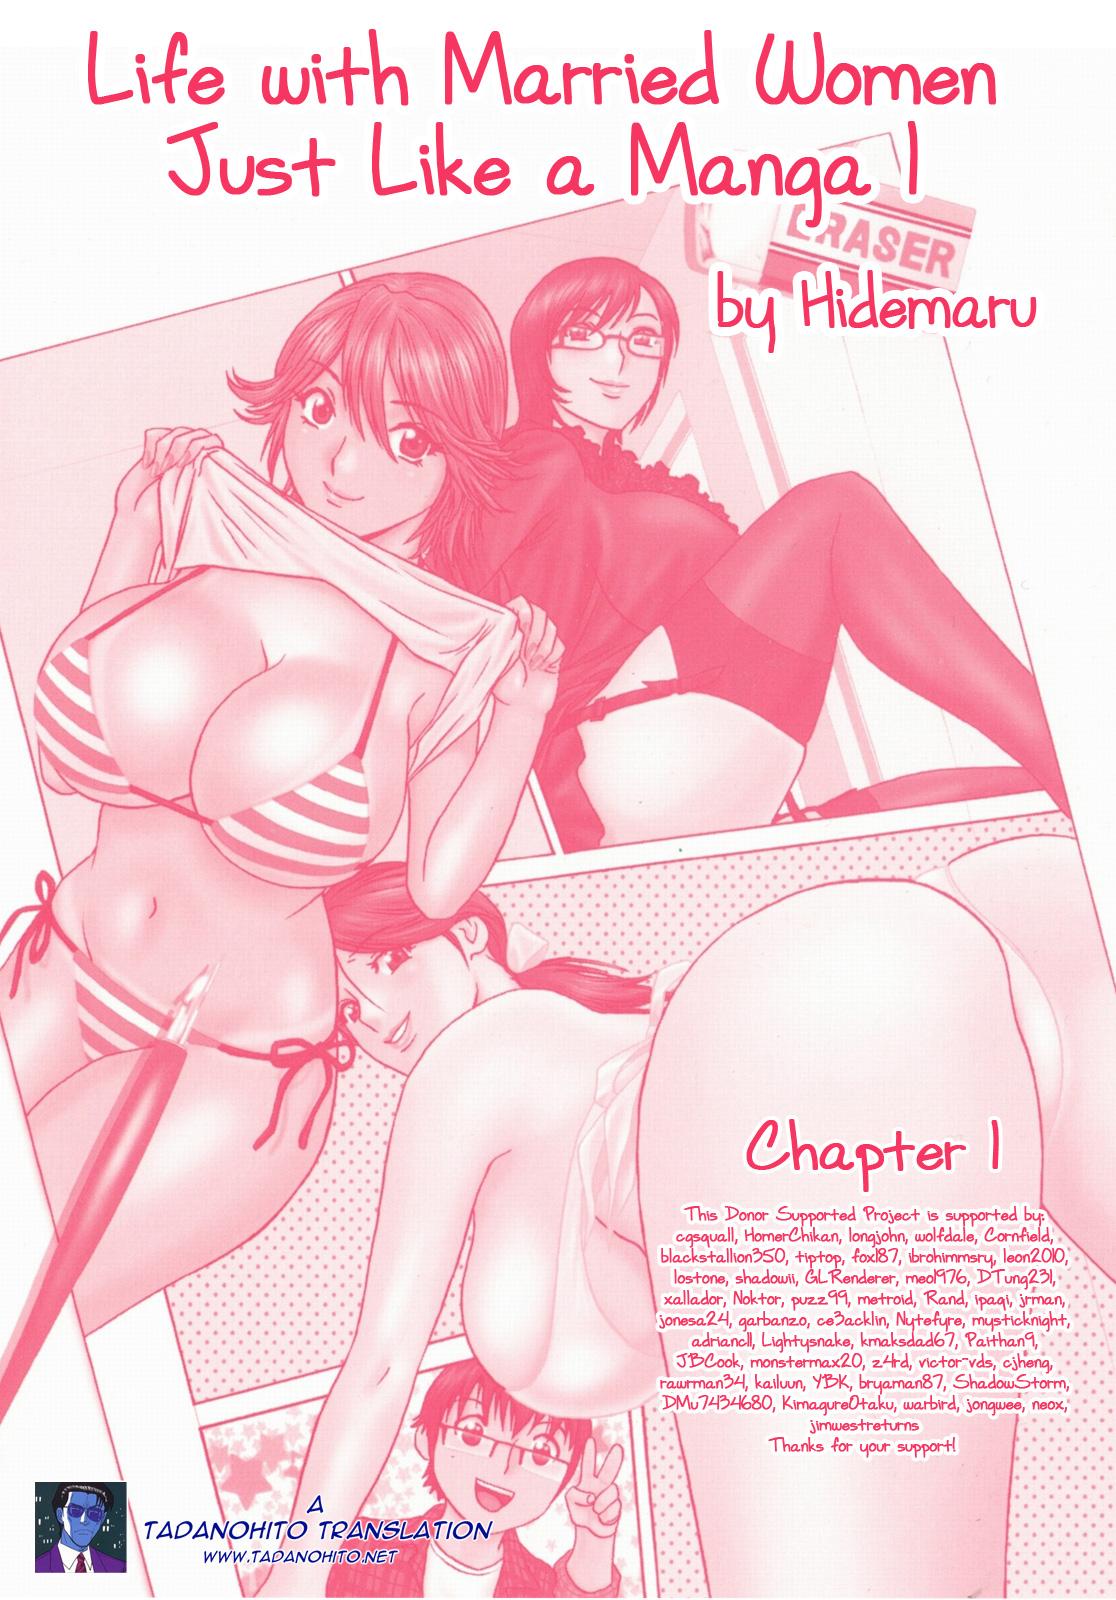 [Hidemaru] Life with Married Women Just Like a Manga 1 - Ch. 1-9 [English] {Tadanohito} 25